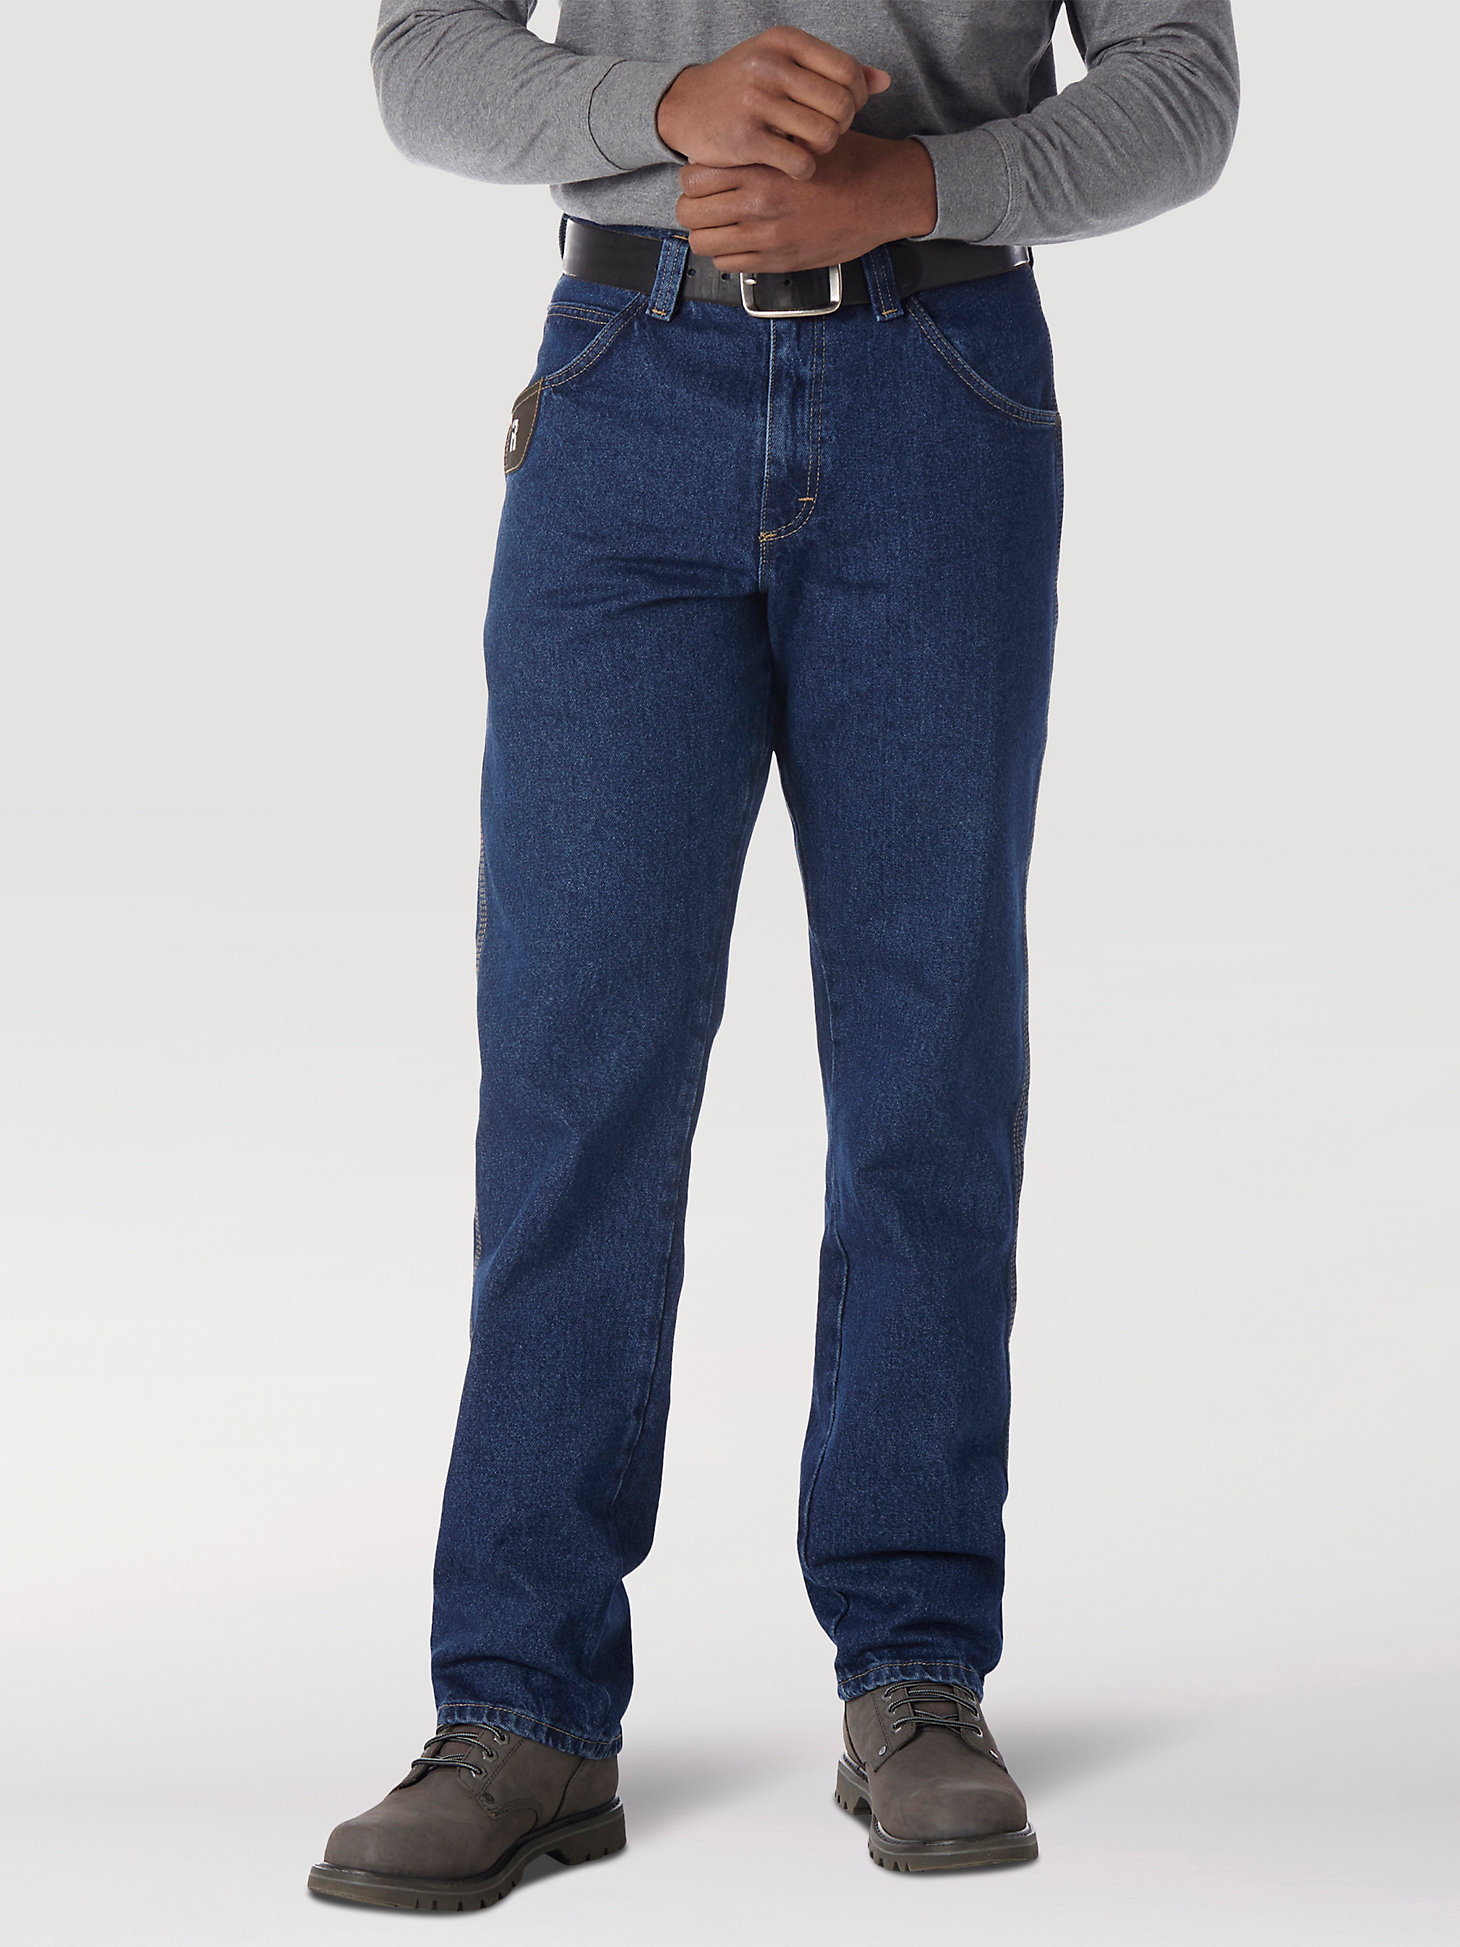 Wrangler® RIGGS Workwear® Five Pocket Jean in Antique Indigo